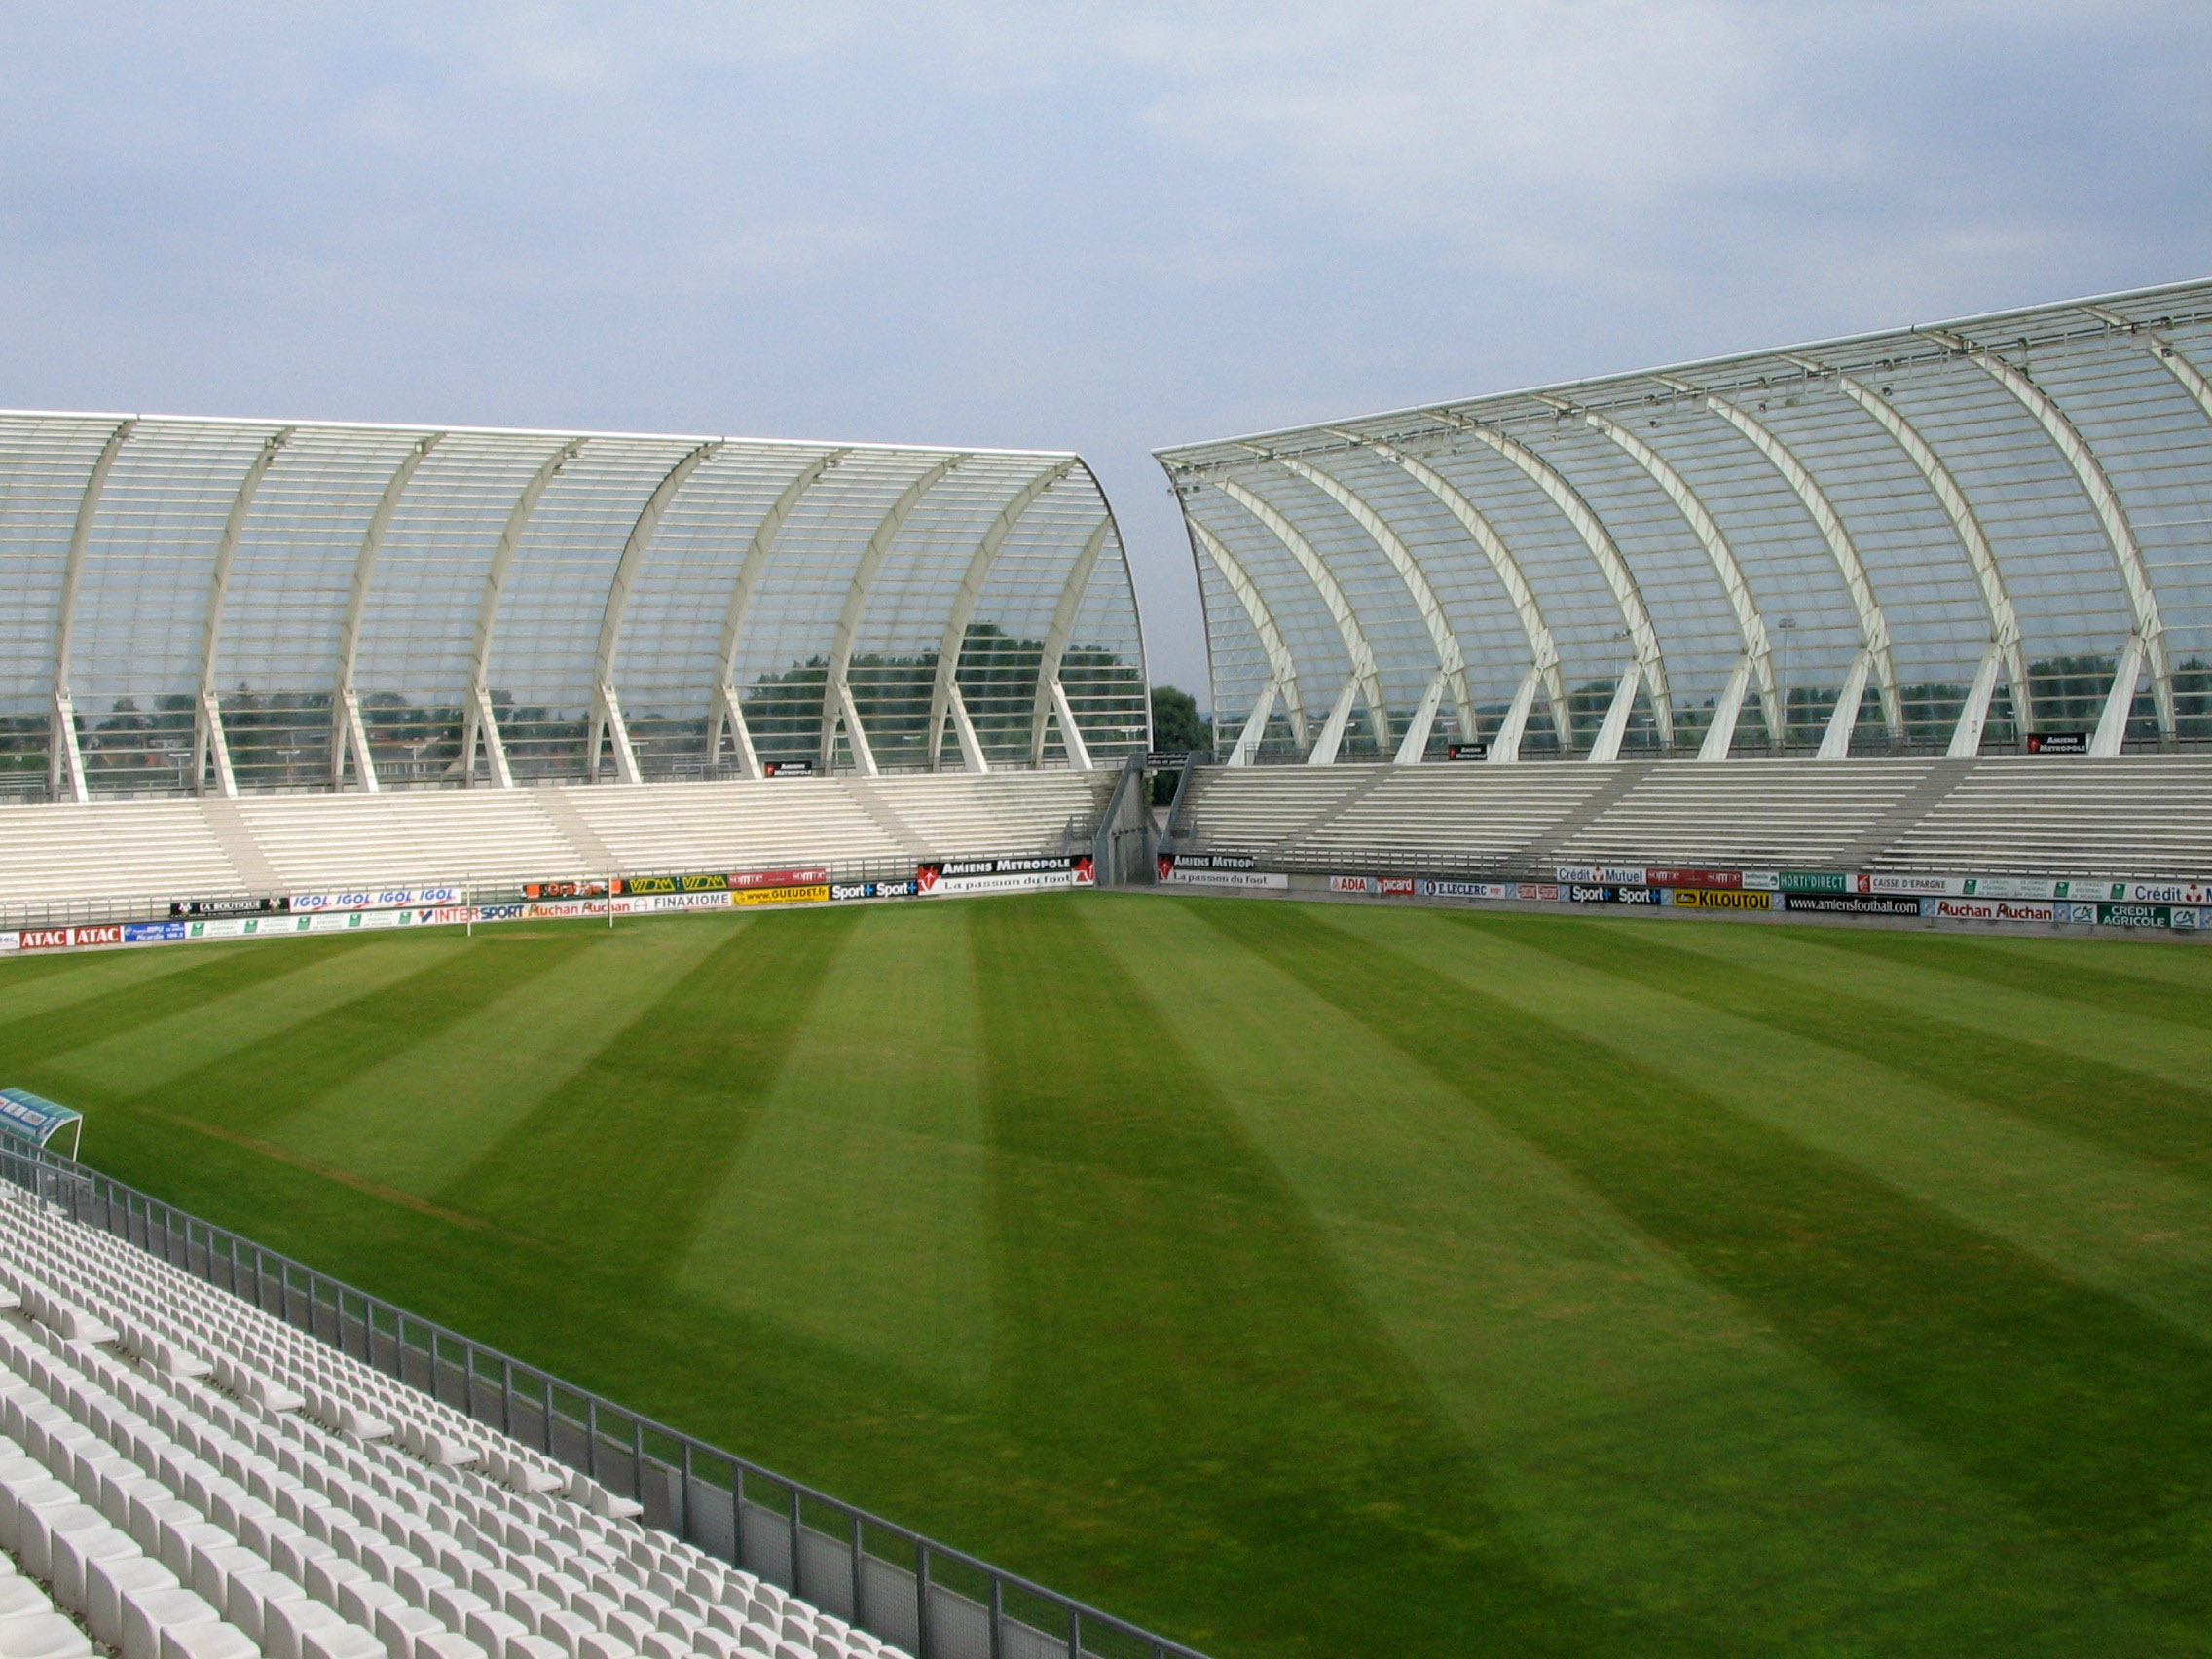 Stade de la Licorne in Amiens, France image - Free stock photo - Public Domain photo - CC0 Images